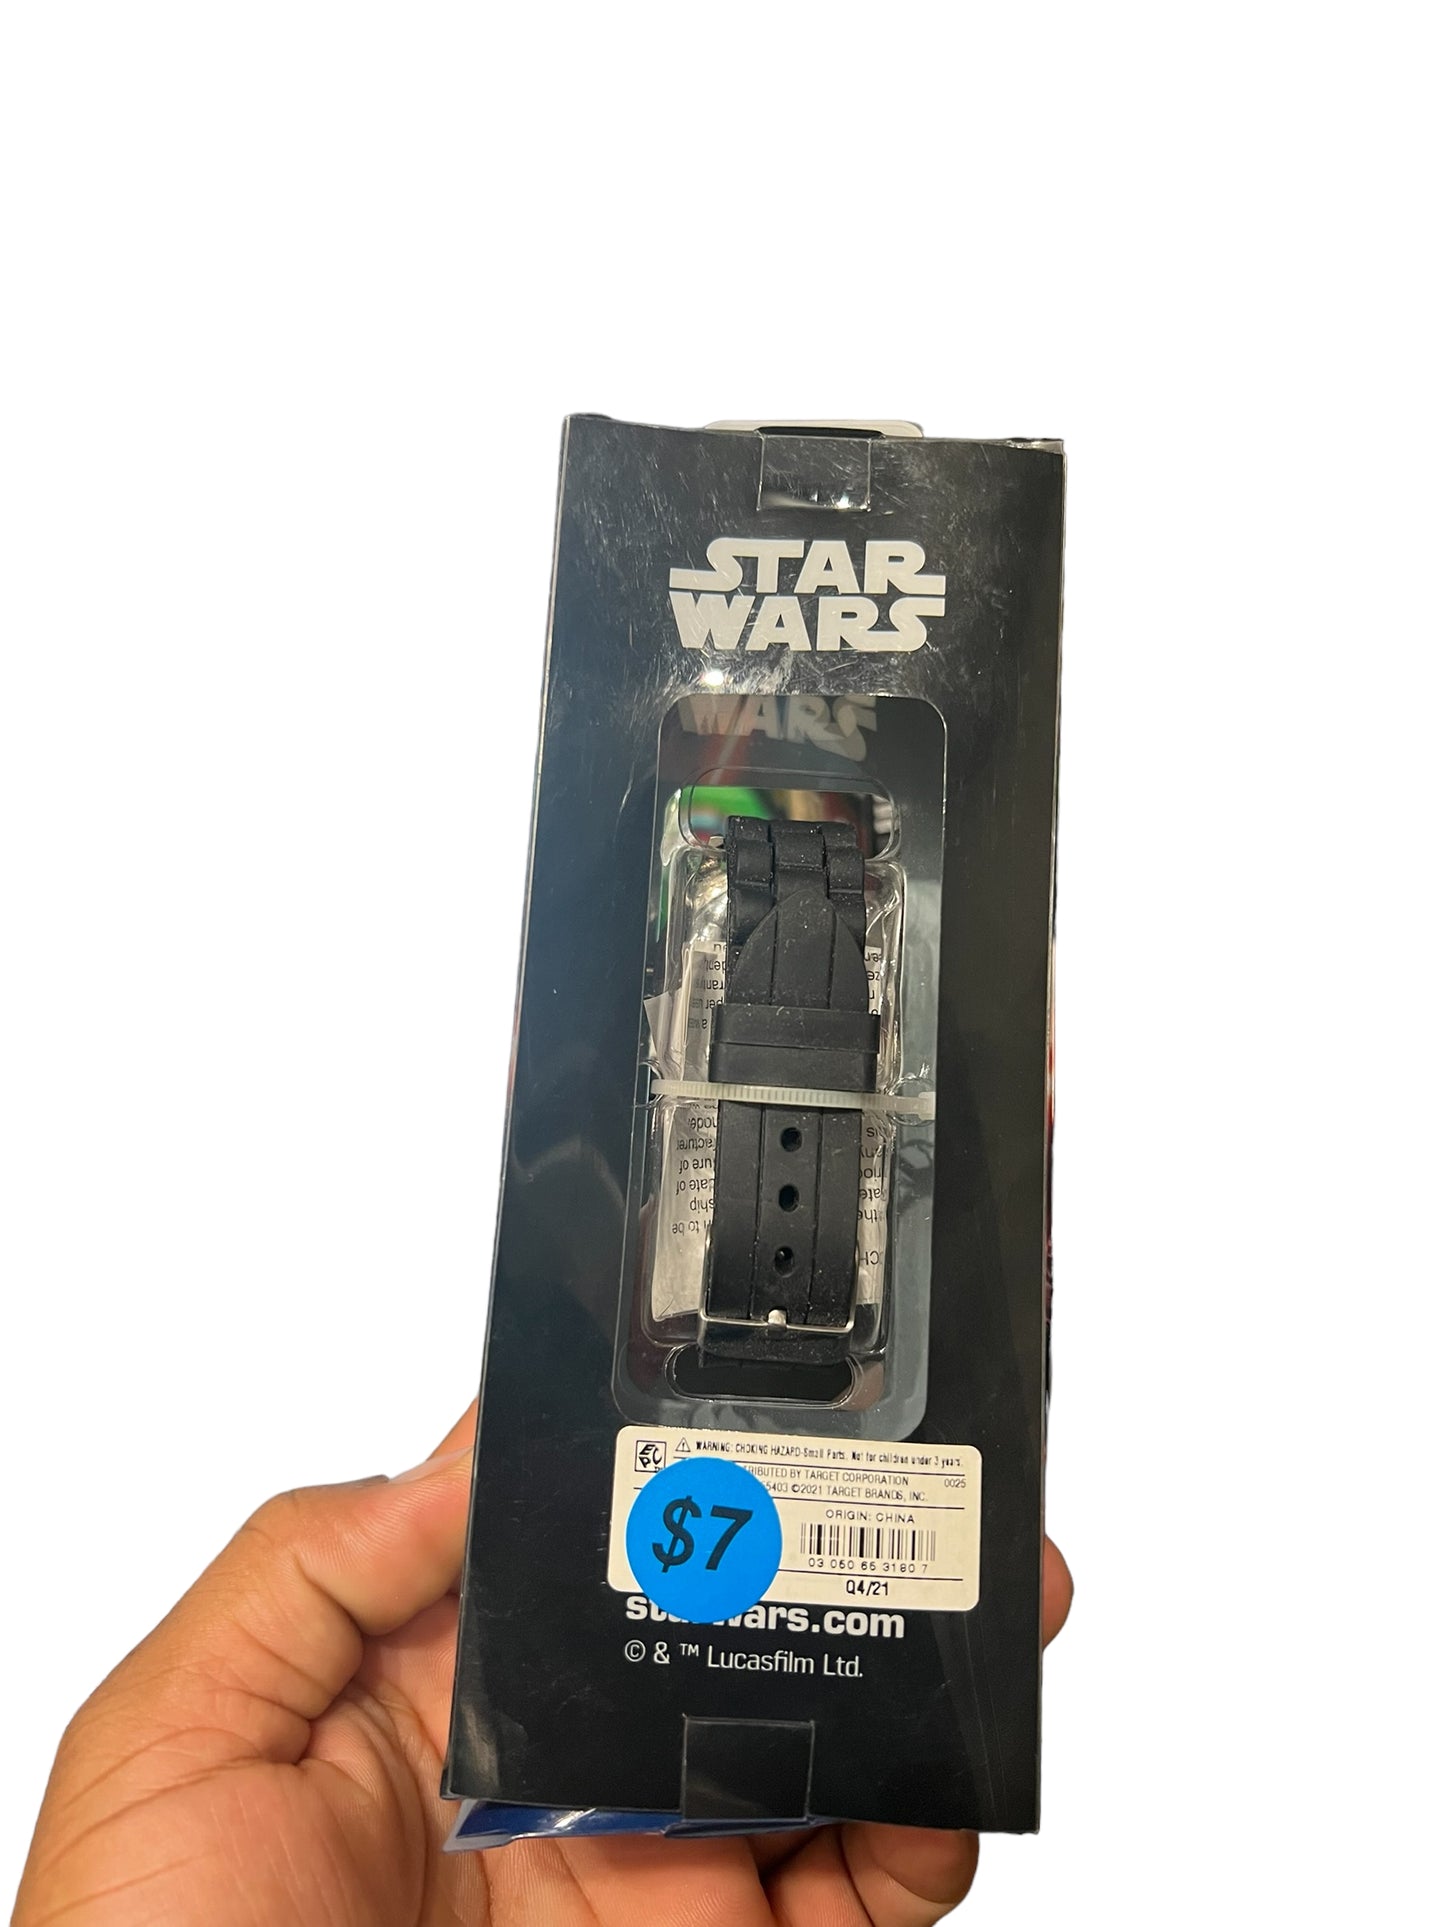 Disney Star Wars Darth Vader Digital Top Spinner Watch With Black Band